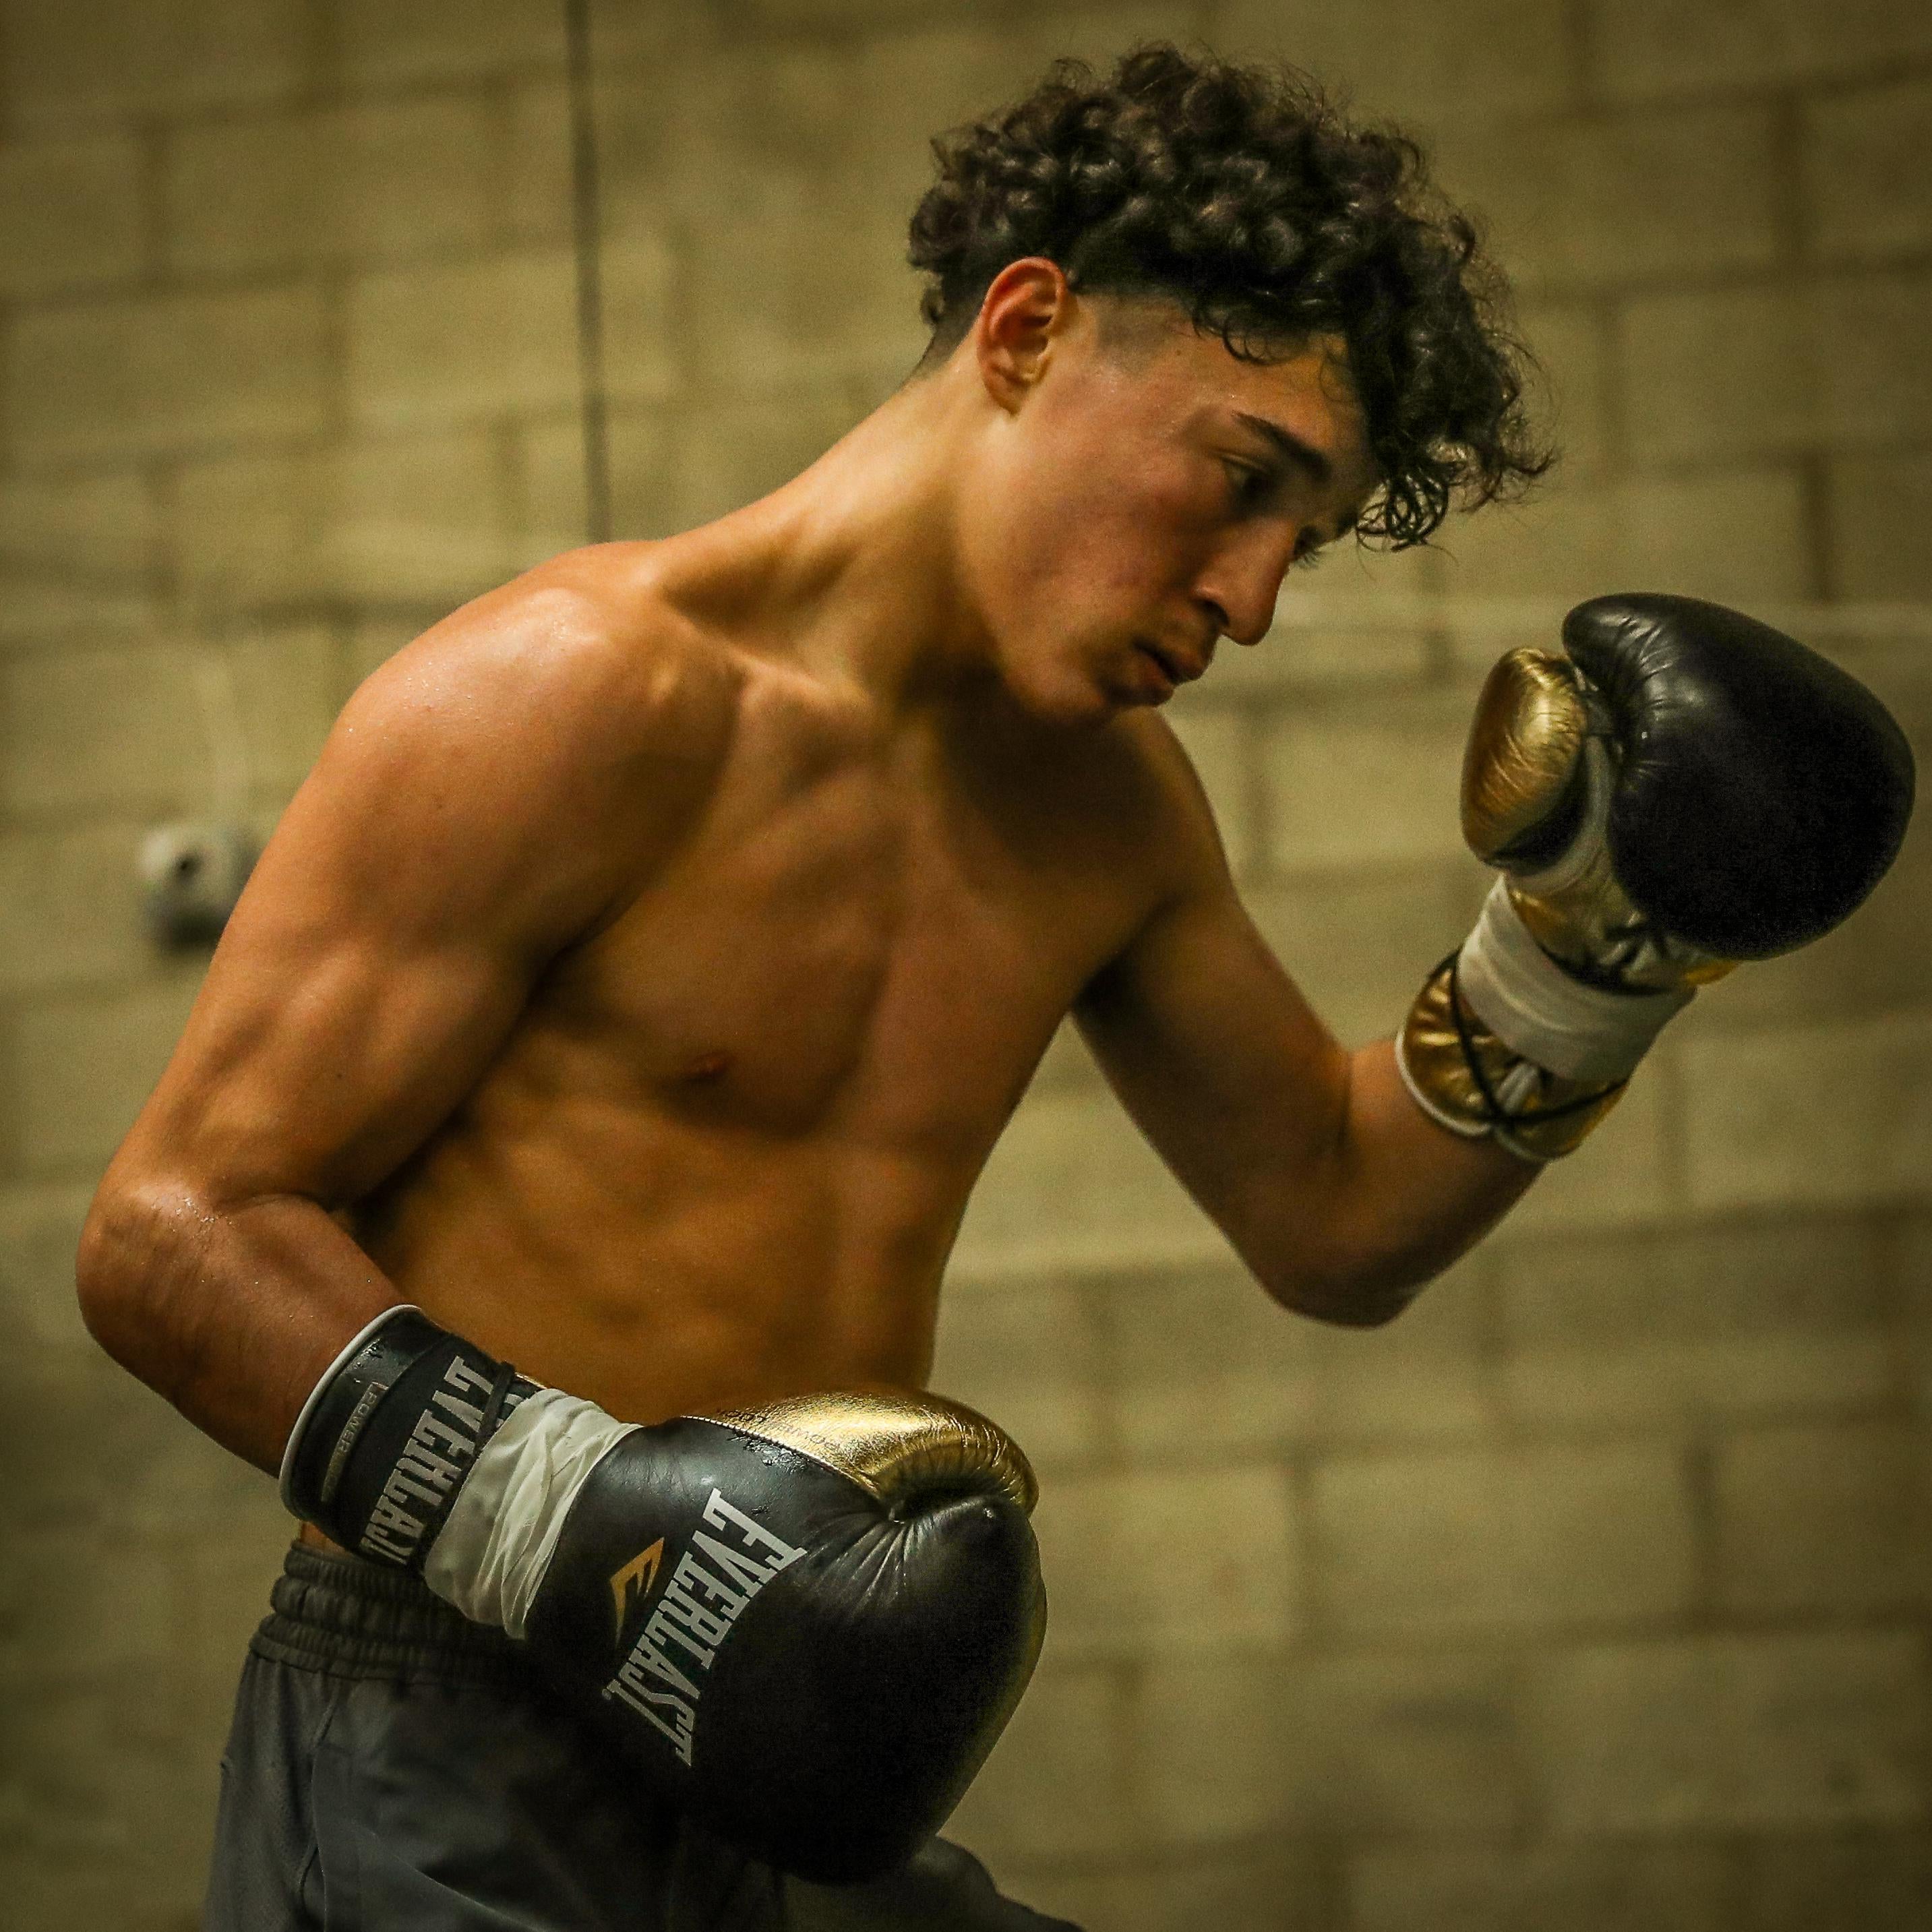 USA Boxer Steve Navarro, color photography, Boxing, Team Steve Navarro